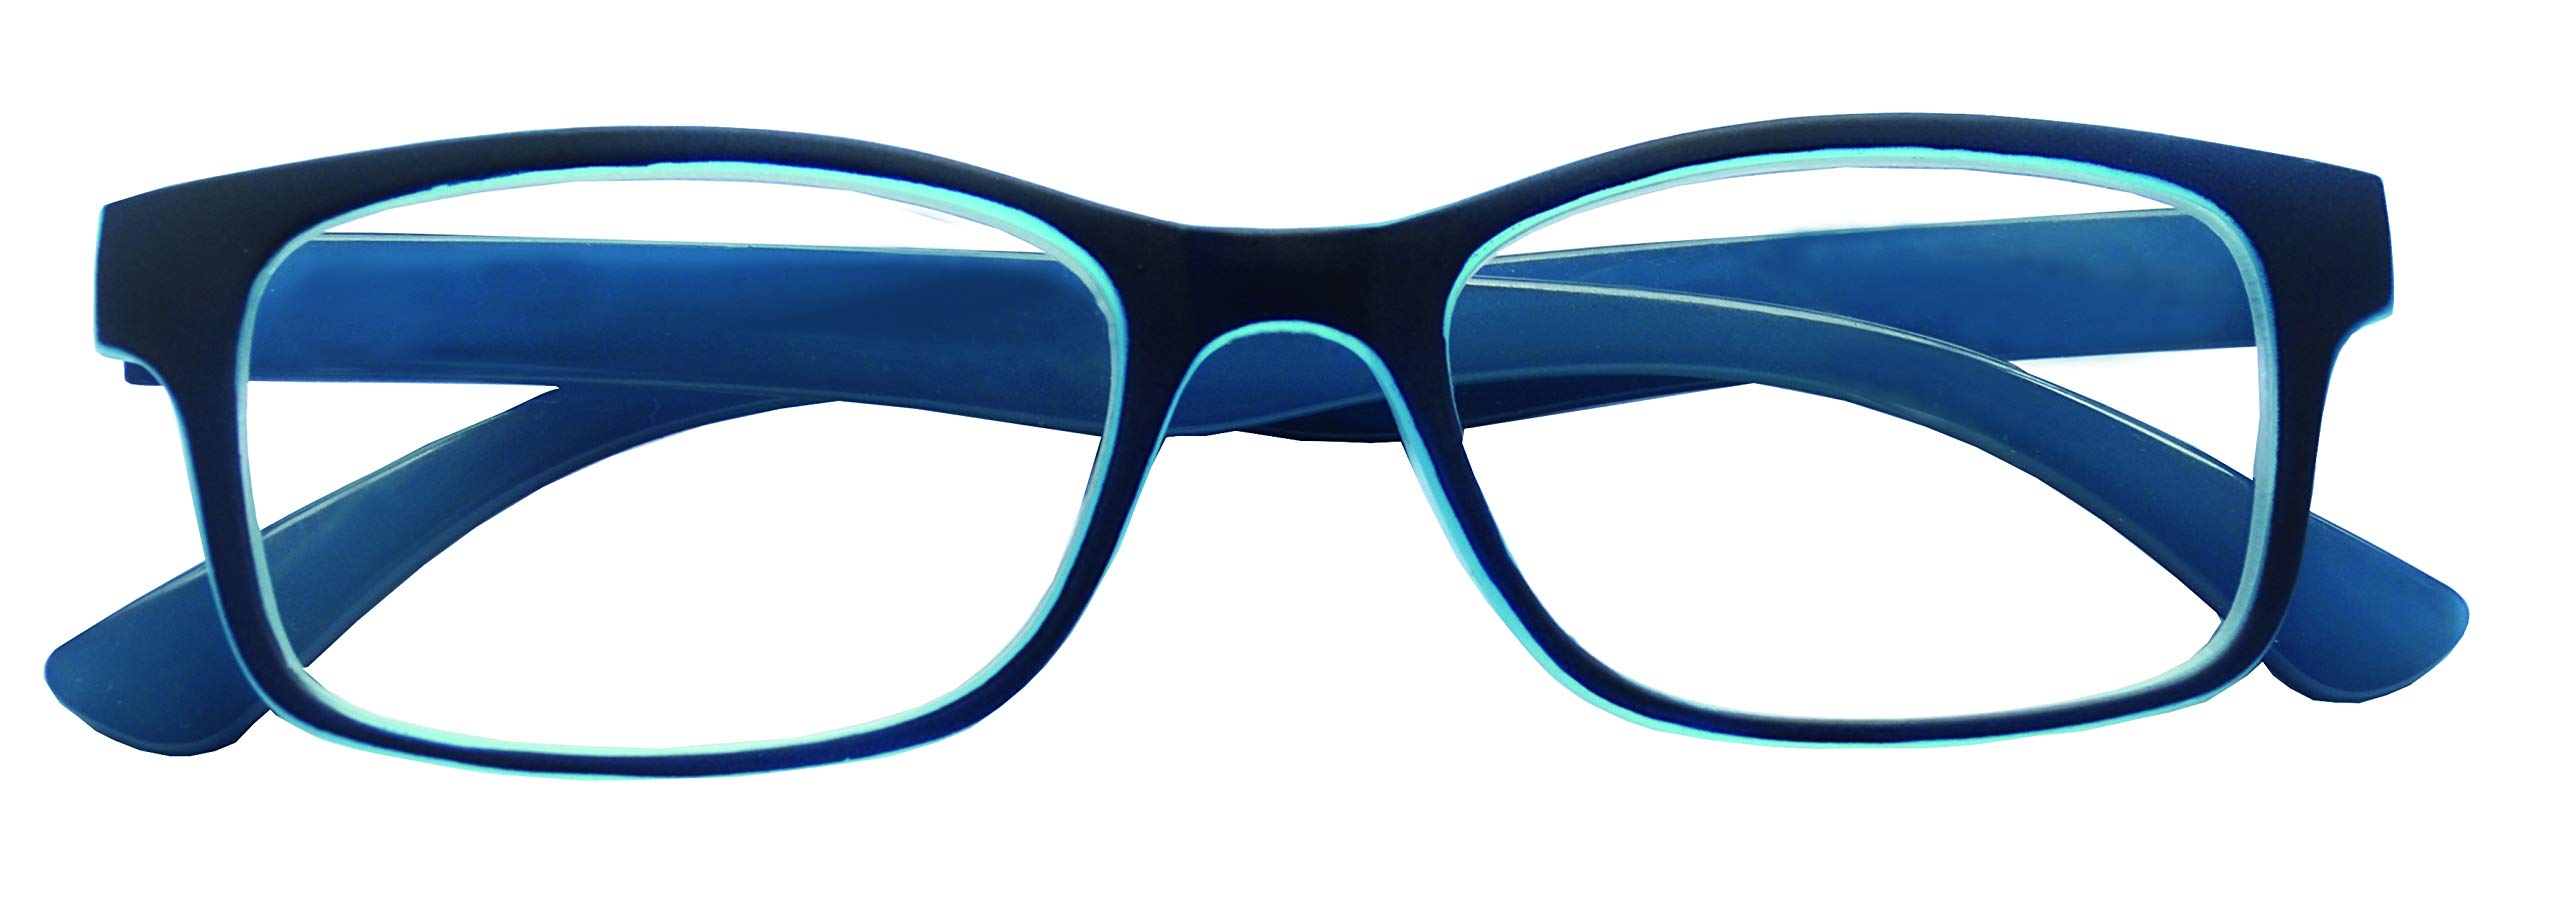 Occhiale da lettura freedom in plastica blu-azzurro +1,50